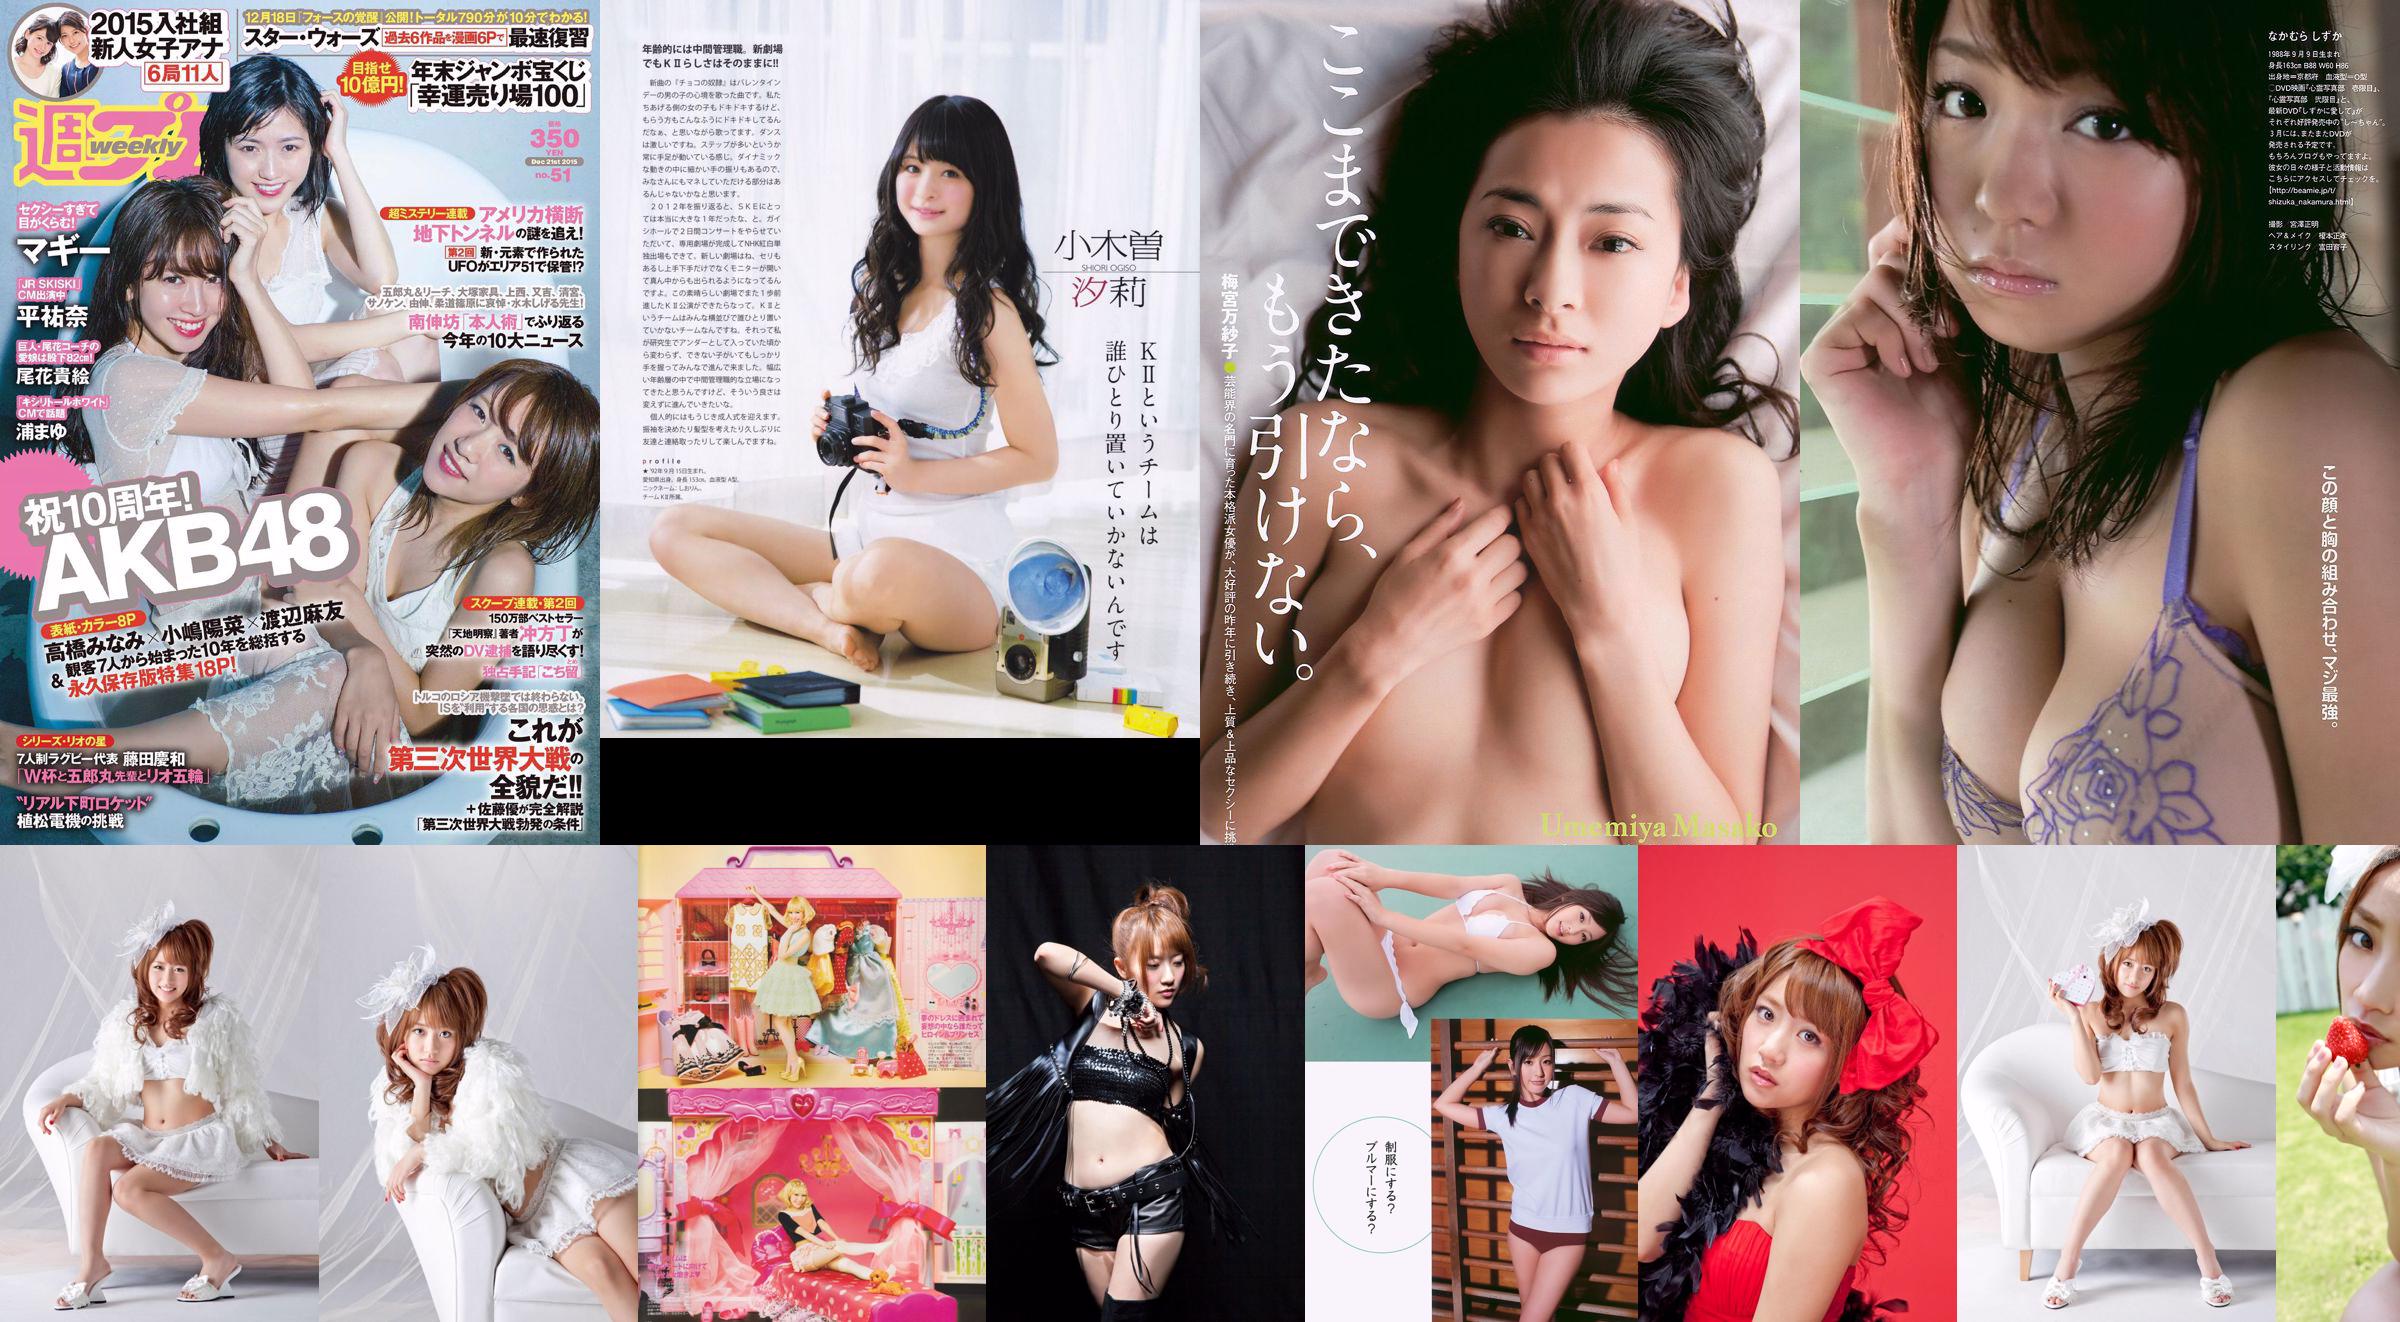 Minami Takahashi Haruna Kojima Mayu Watanabe Maggie Takae Obana Yuna Taira Mayu Ura Mitadera En [Weekly Playboy] 2015 nr 51 Zdjęcie No.a090be Strona 1